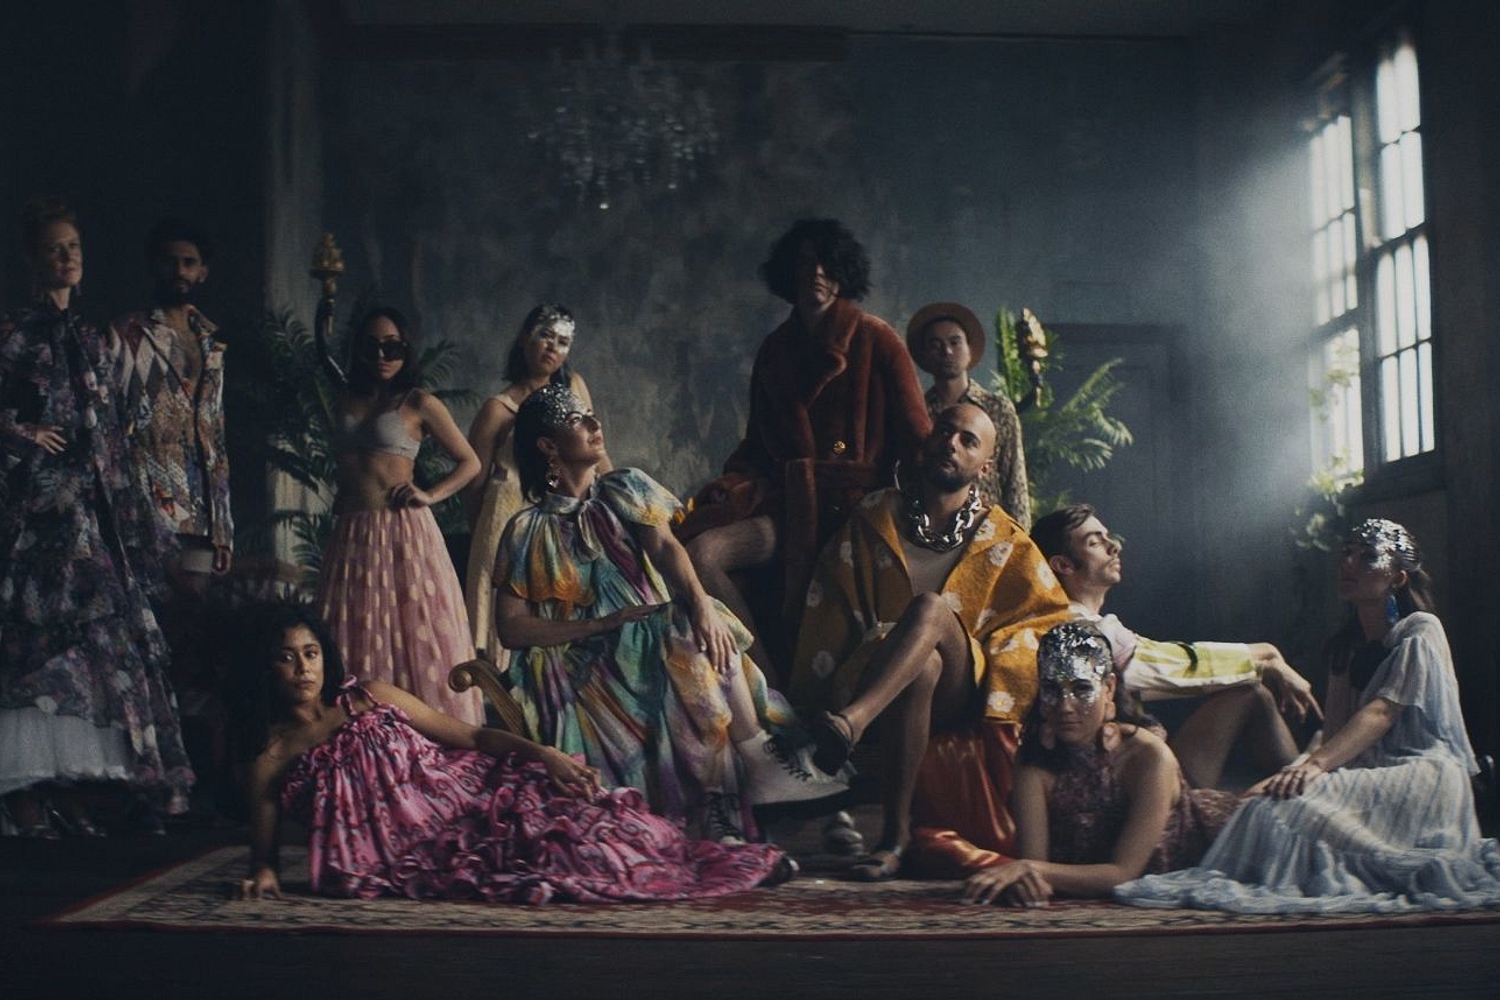 Haiku Hands release 'Fashion Model Art' video